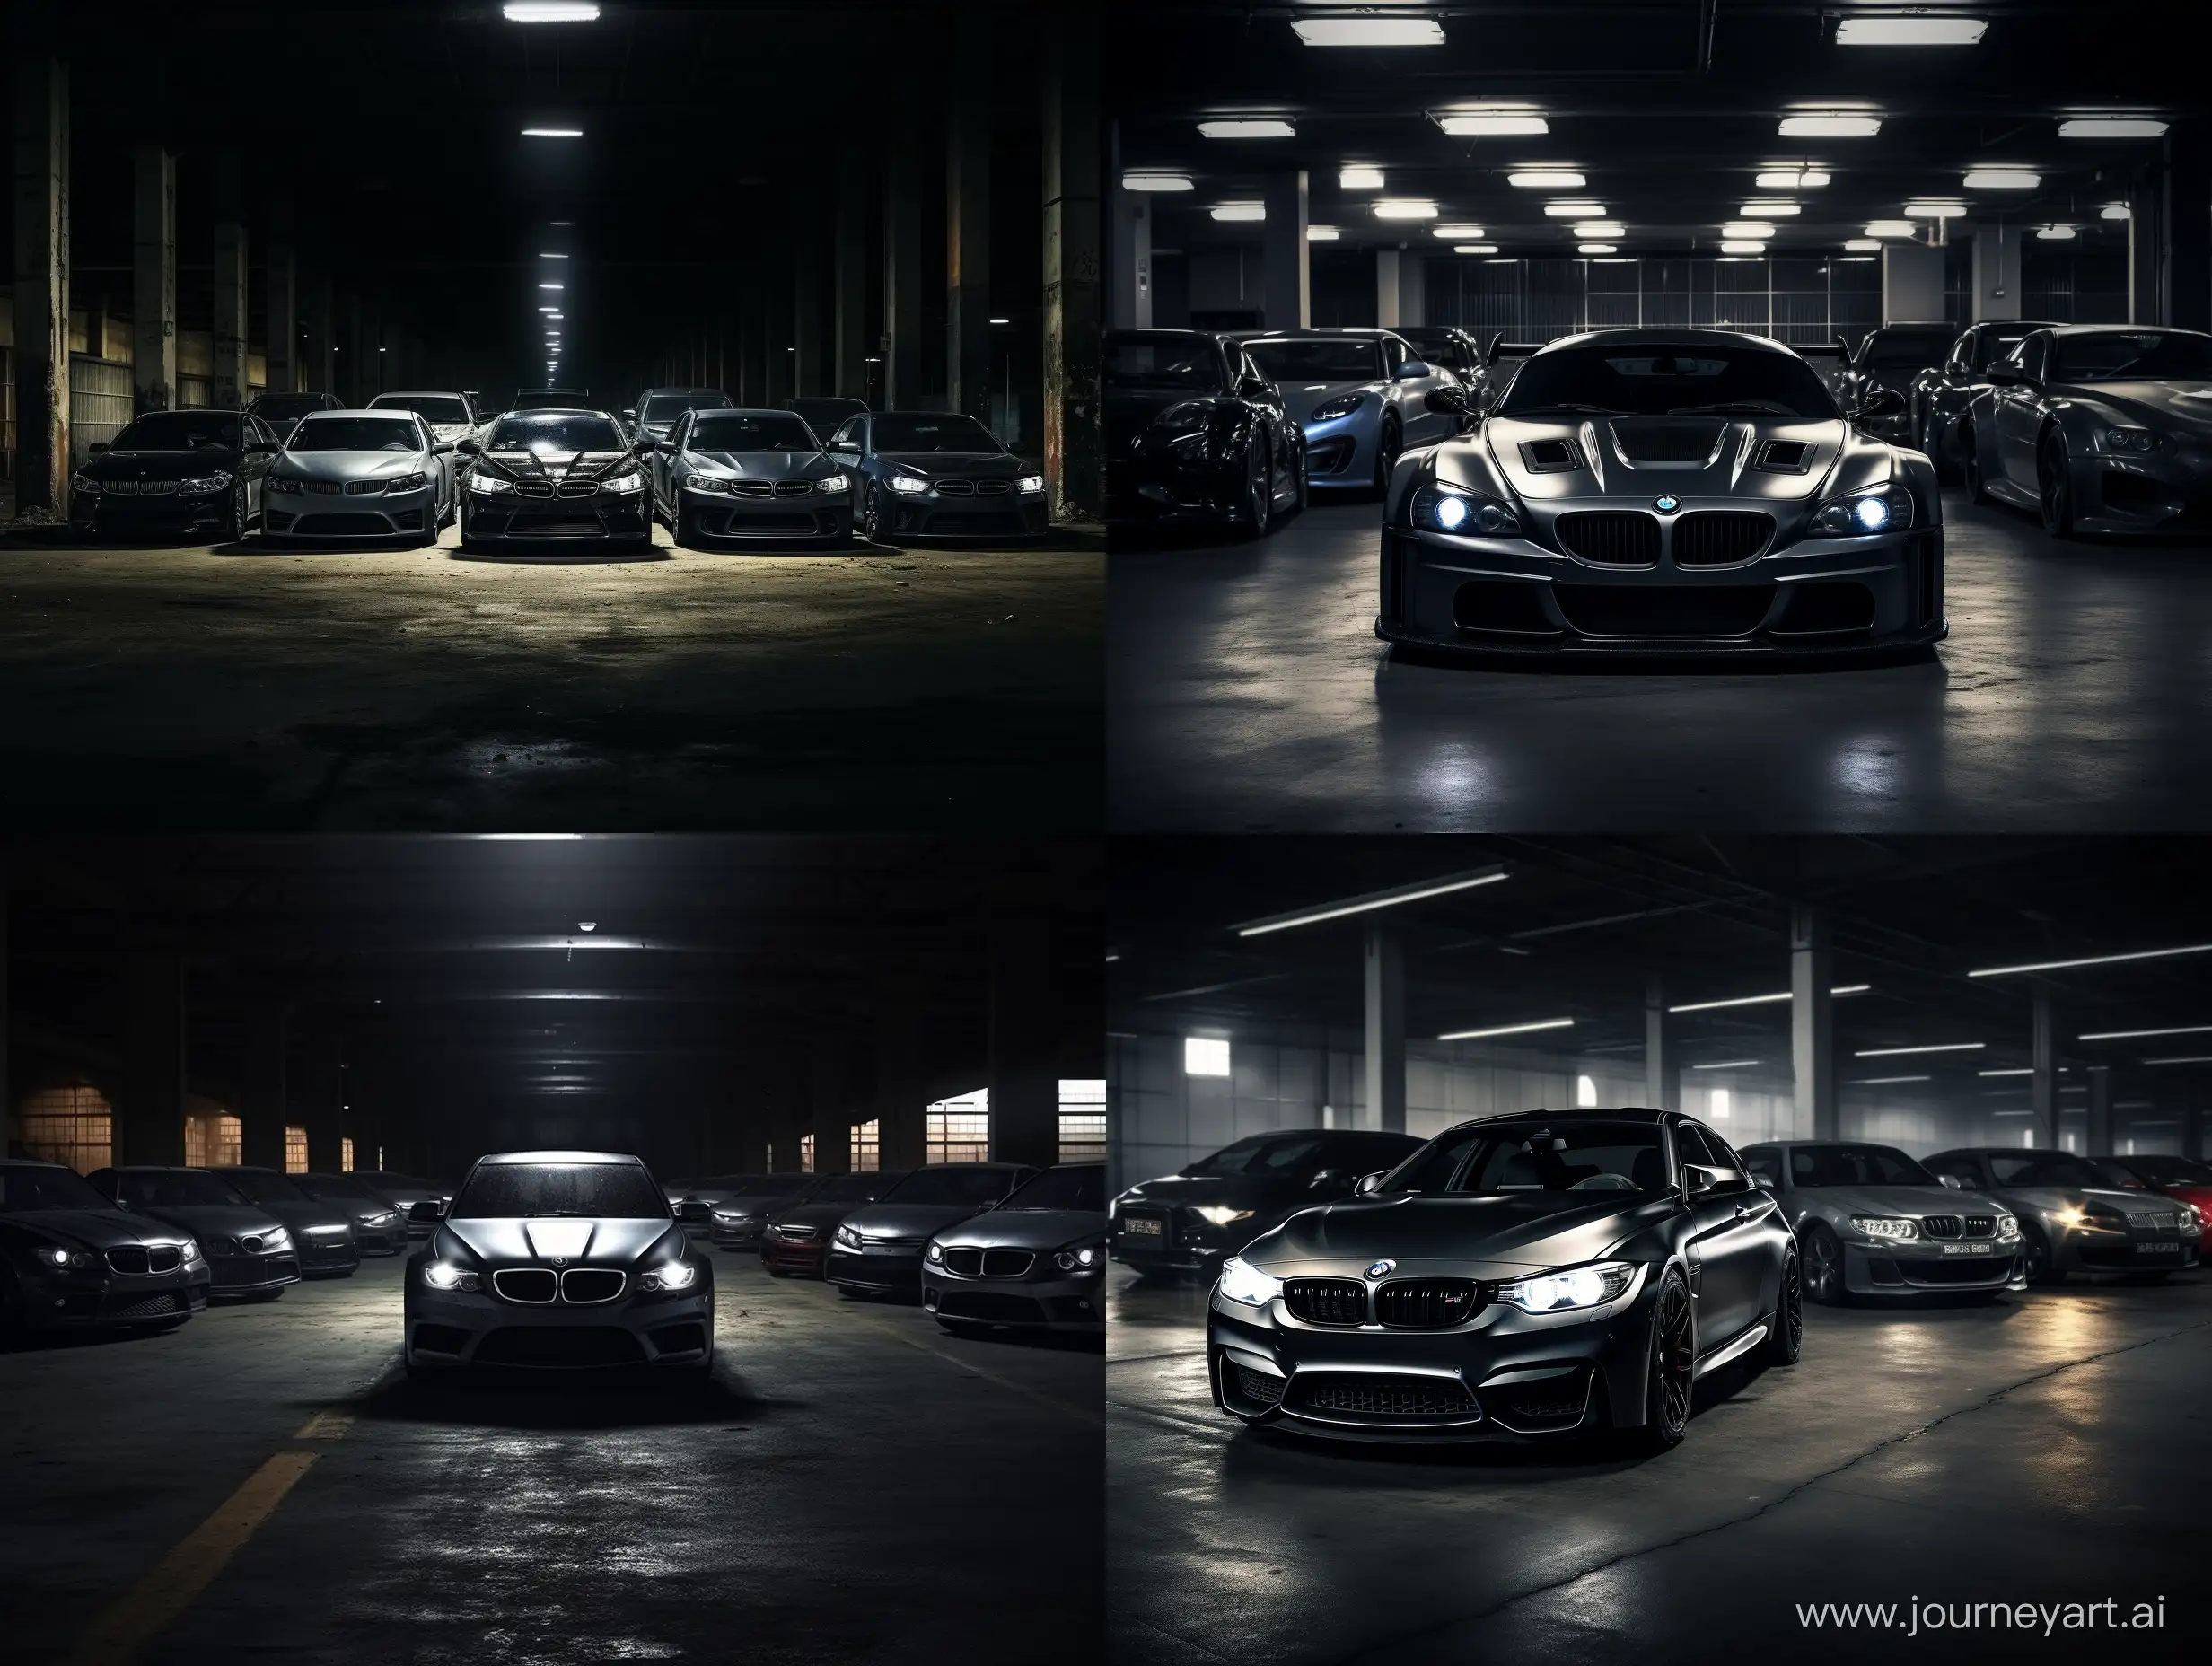 Luxurious-Car-Collection-in-Stylish-Garage-Dark-Elegance-Album-Cover